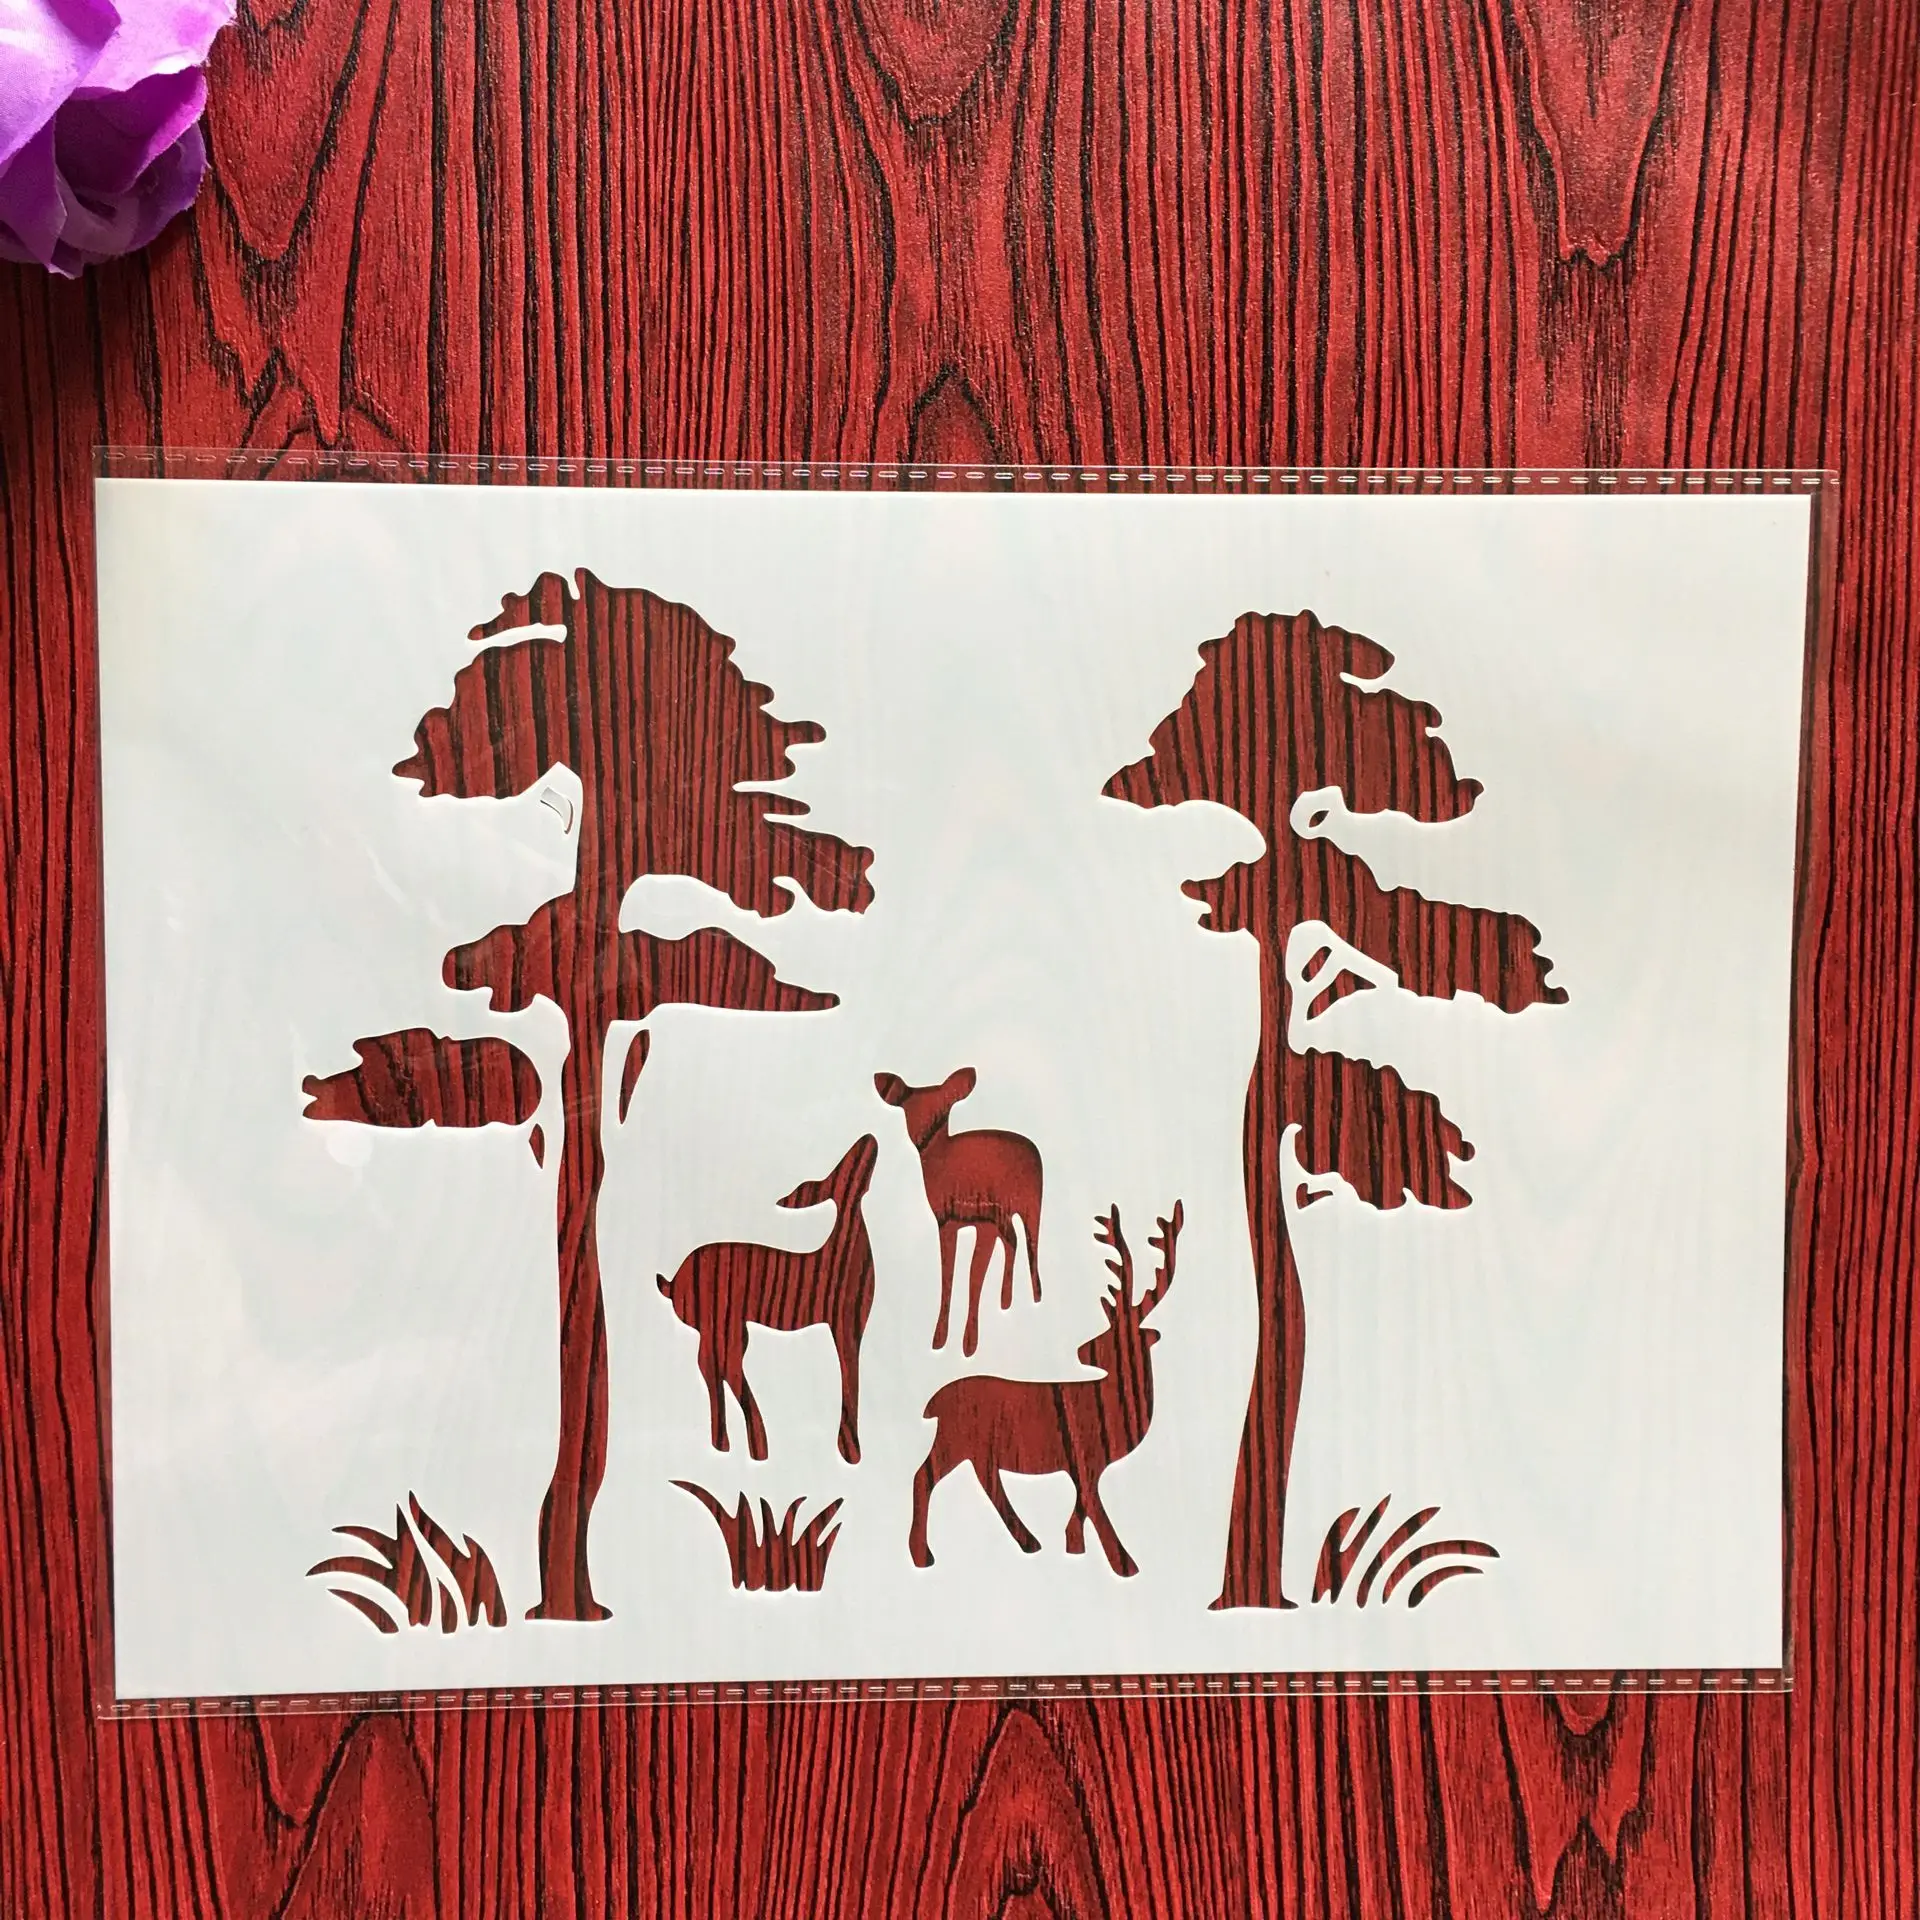 

A4 29 * 21cm Sika Deer tree DIY Stencils Wall Painting Scrapbook Coloring Embossing Album Decorative Paper Card Template